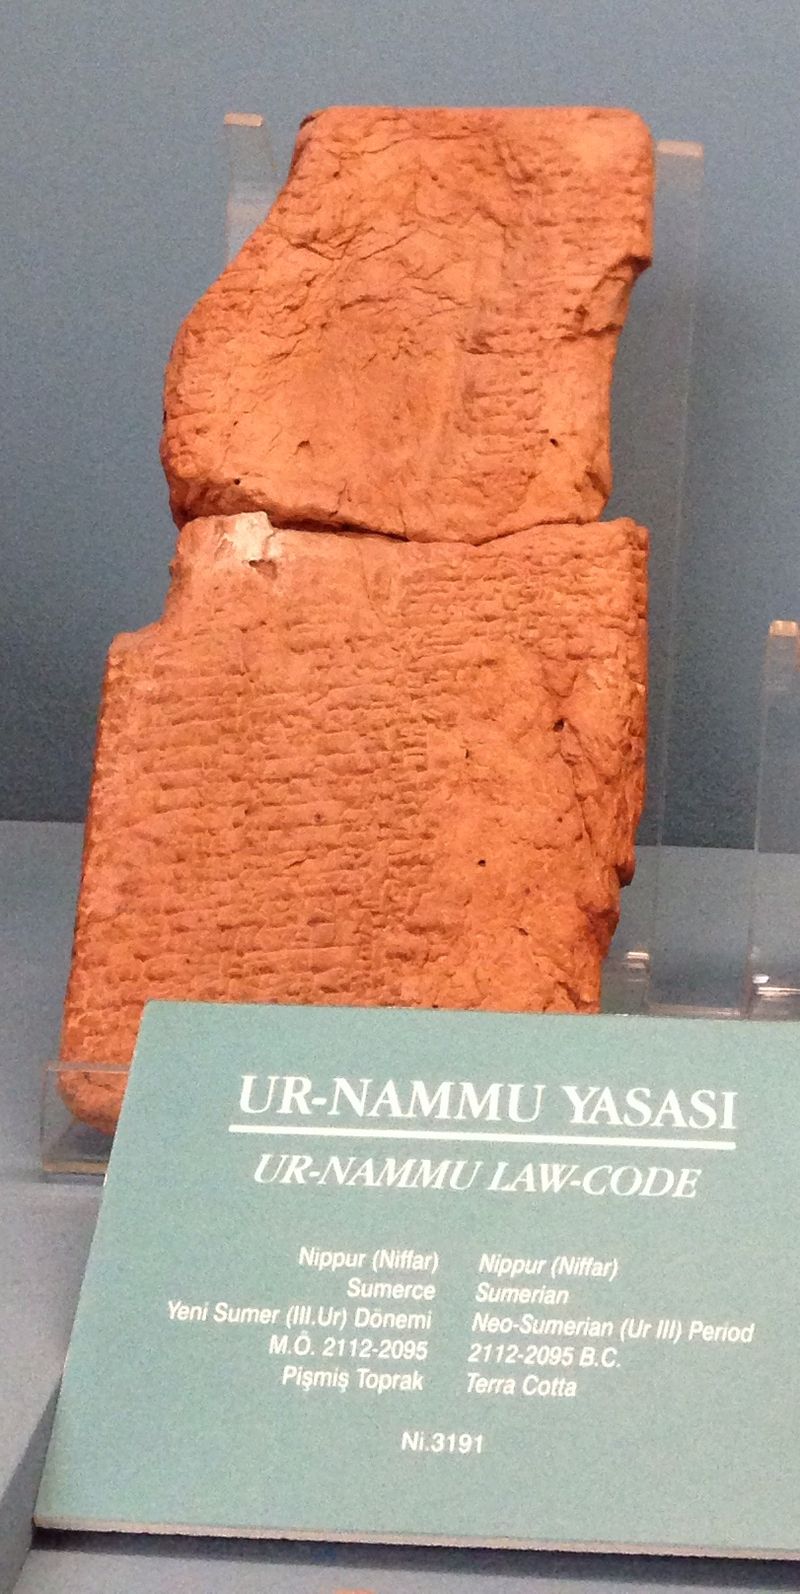 "Ur Nammu code Istanbul" by Istanbul Archaeology Museum - Own work. Licensed under CC0 via Commons - https://commons.wikimedia.org/wiki/File:Ur_Nammu_code_Istanbul.jpg#/media/File:Ur_Nammu_code_Istanbul.jpg